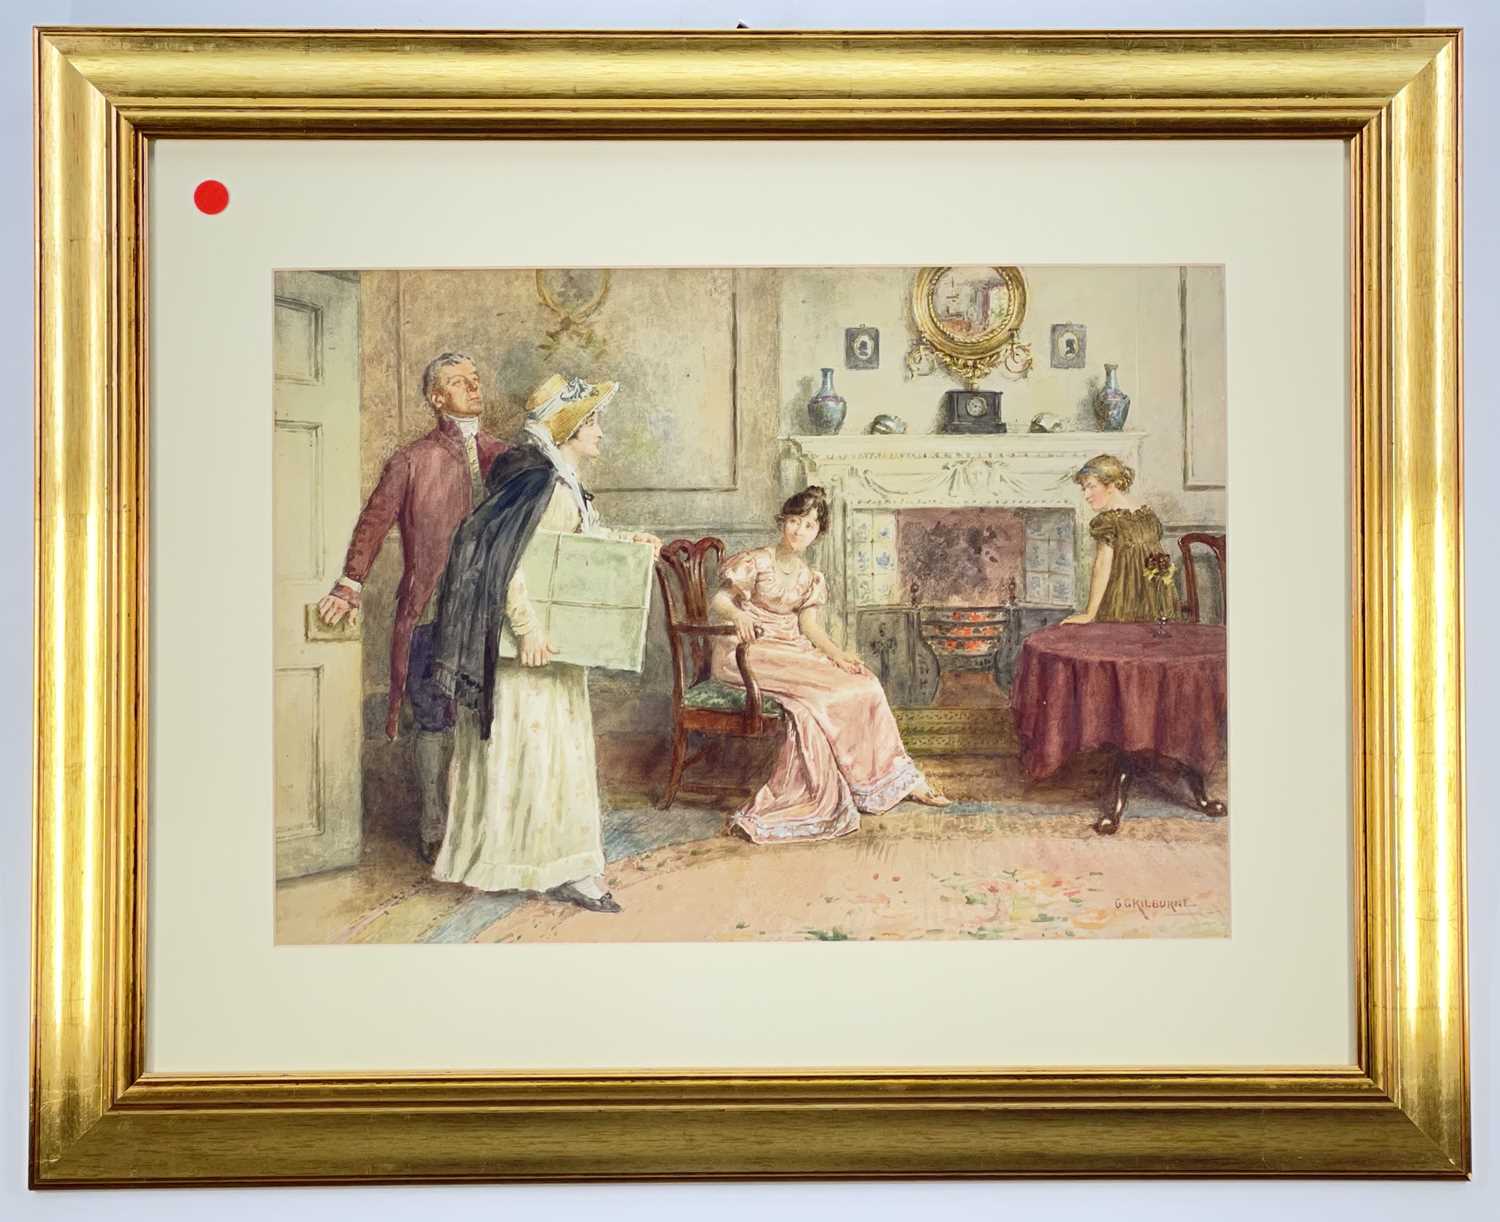 GEORGE KILBURNE RI RBA (1839-1924) watercolour- The Parcel, interior scene with figures in an